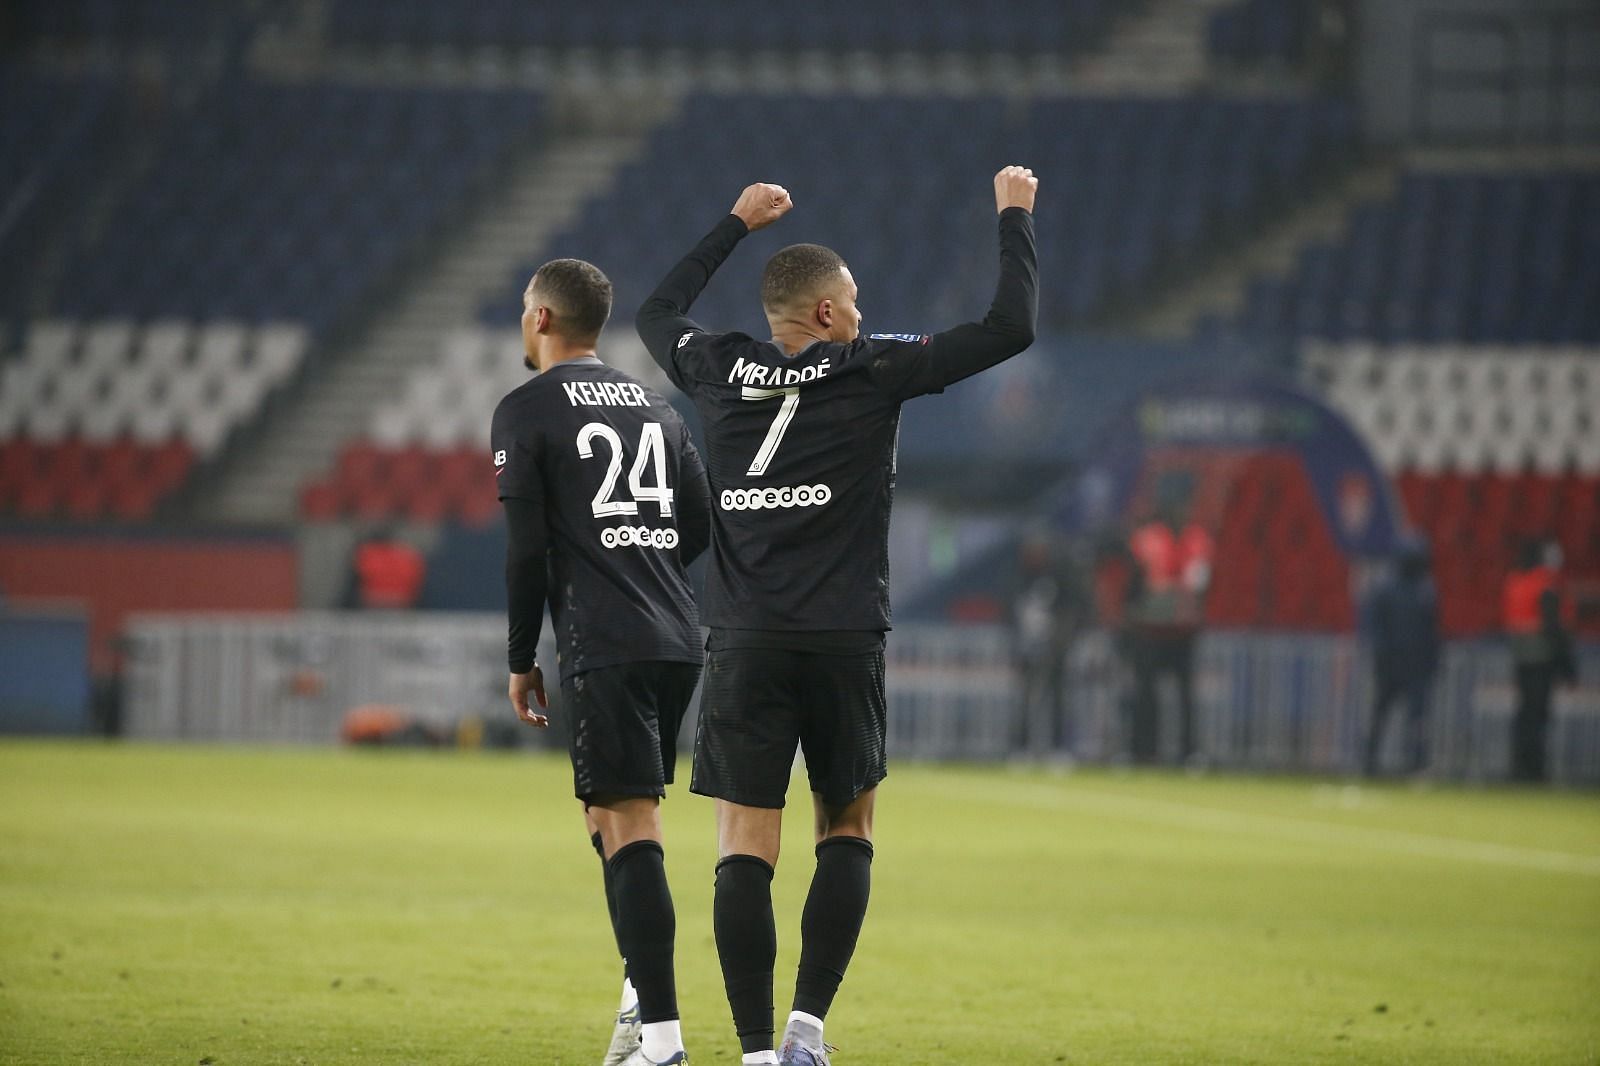 Kylian Mbappe celebrates after scoring a goal. (Image: PSG Twitter)